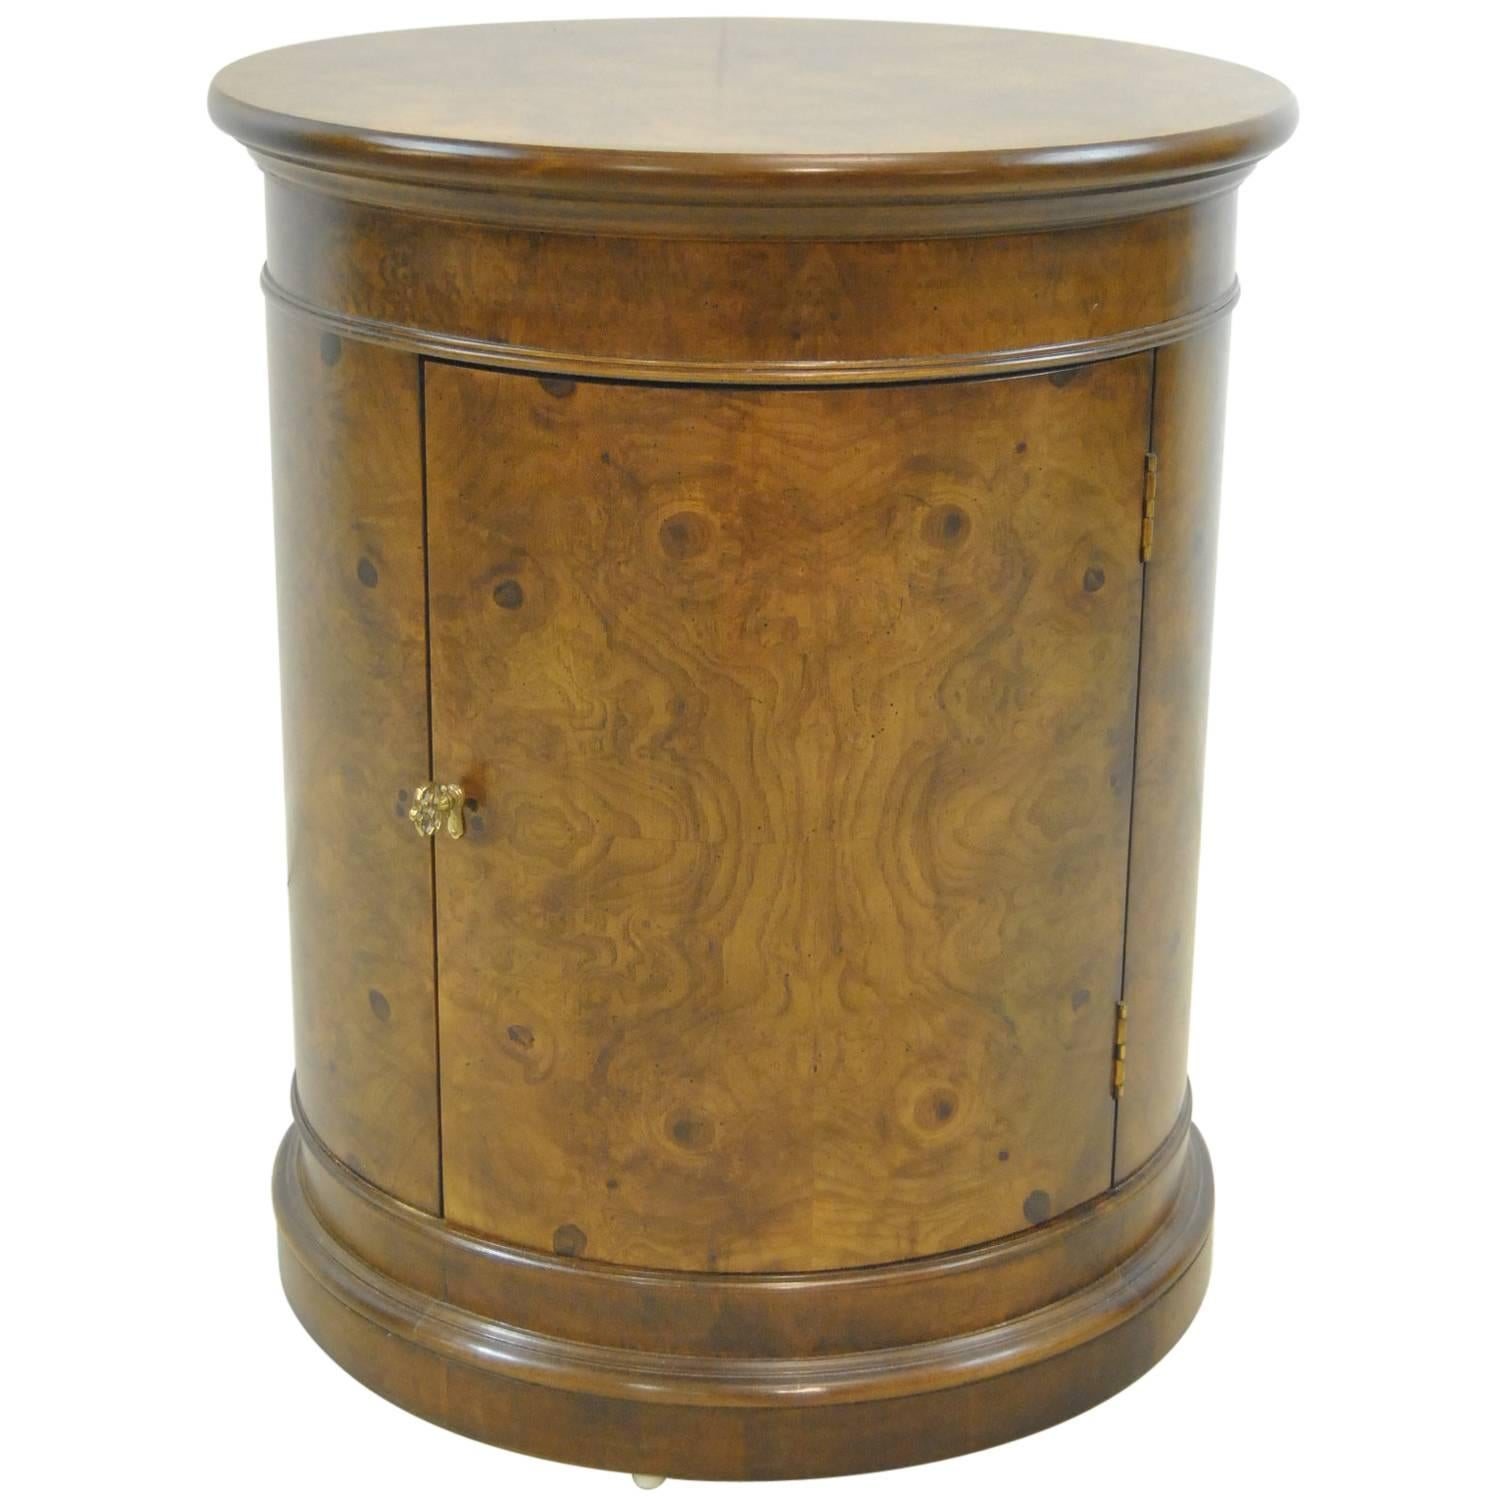 Burled Walnut Round Pedestal Storage Stand or Table by Henredon